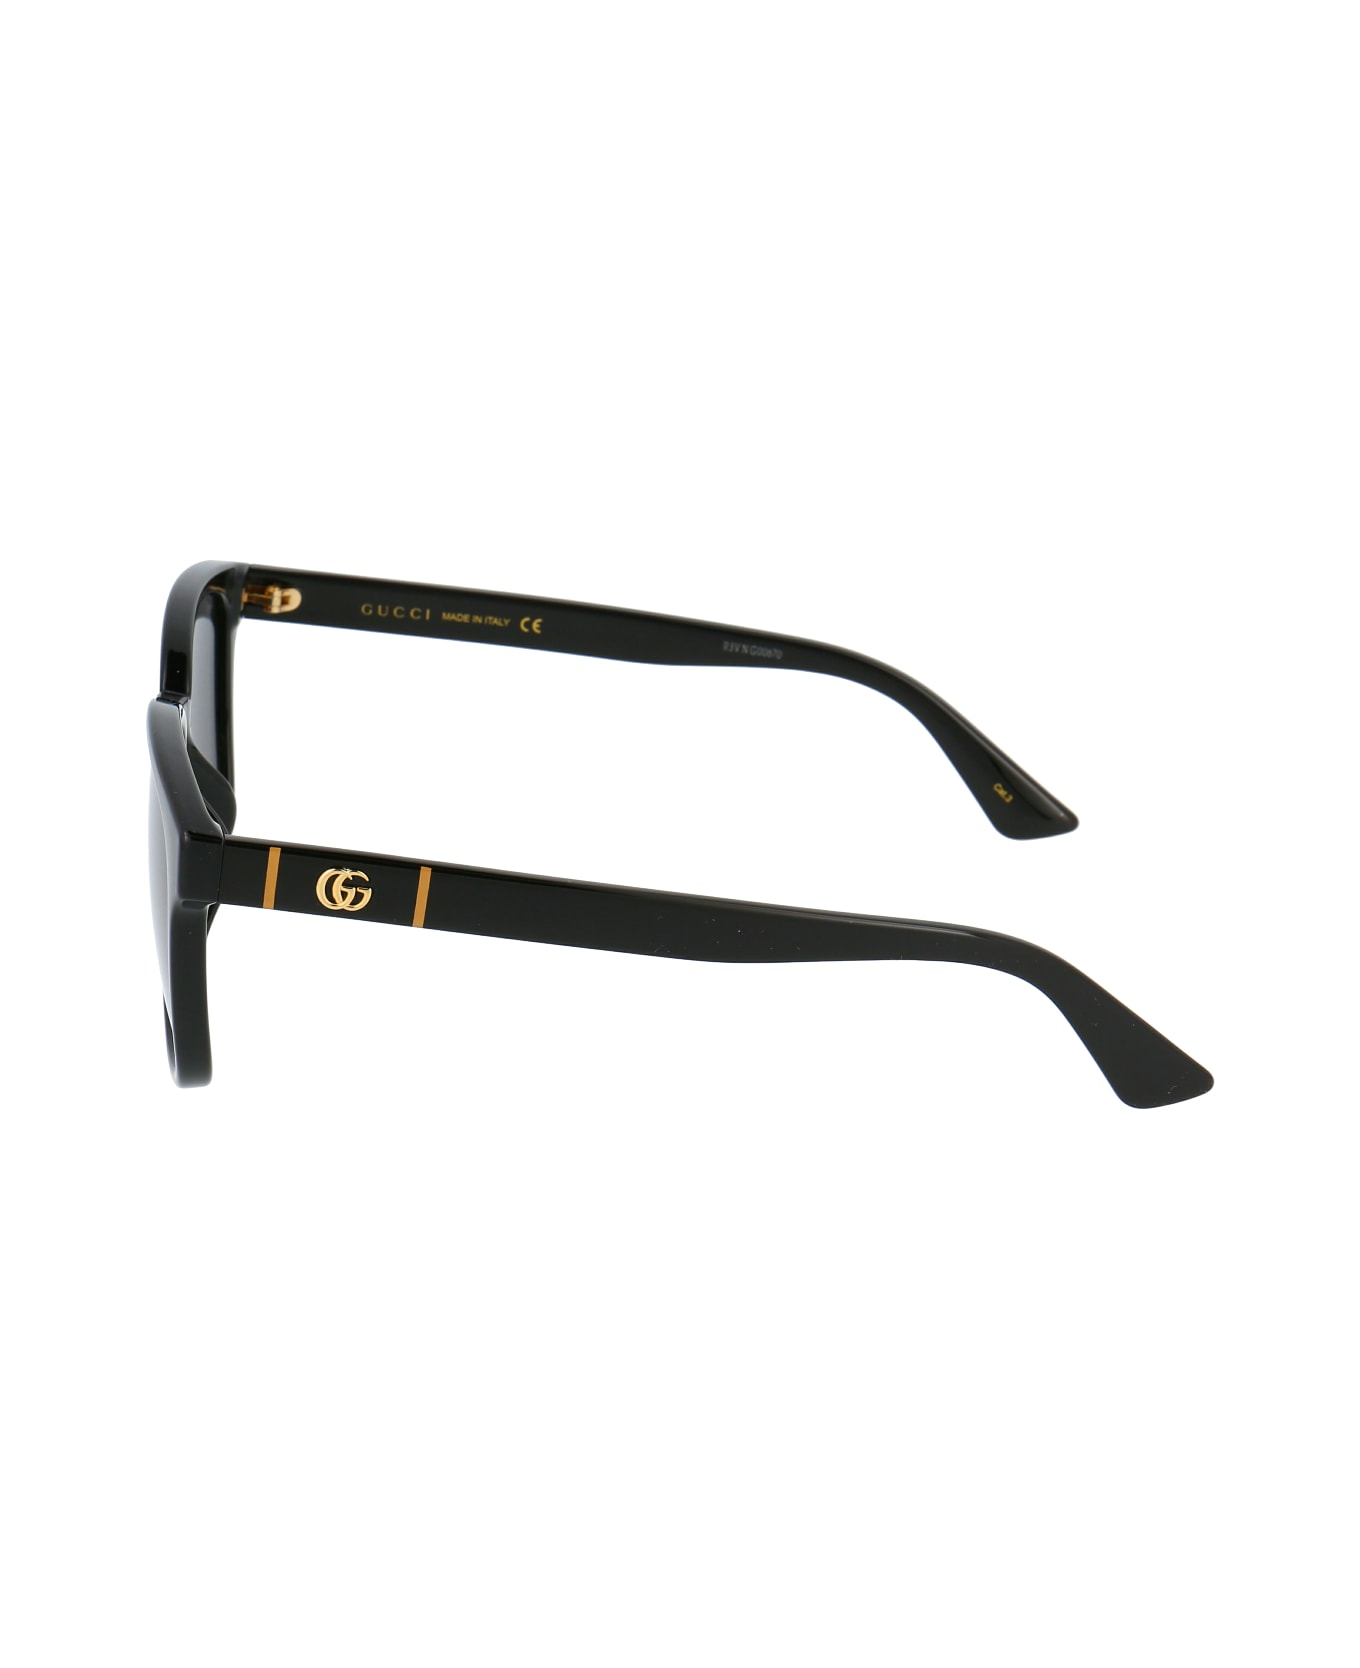 Gucci Eyewear Gg0637sk Sunglasses - 001 BLACK BLACK GREY